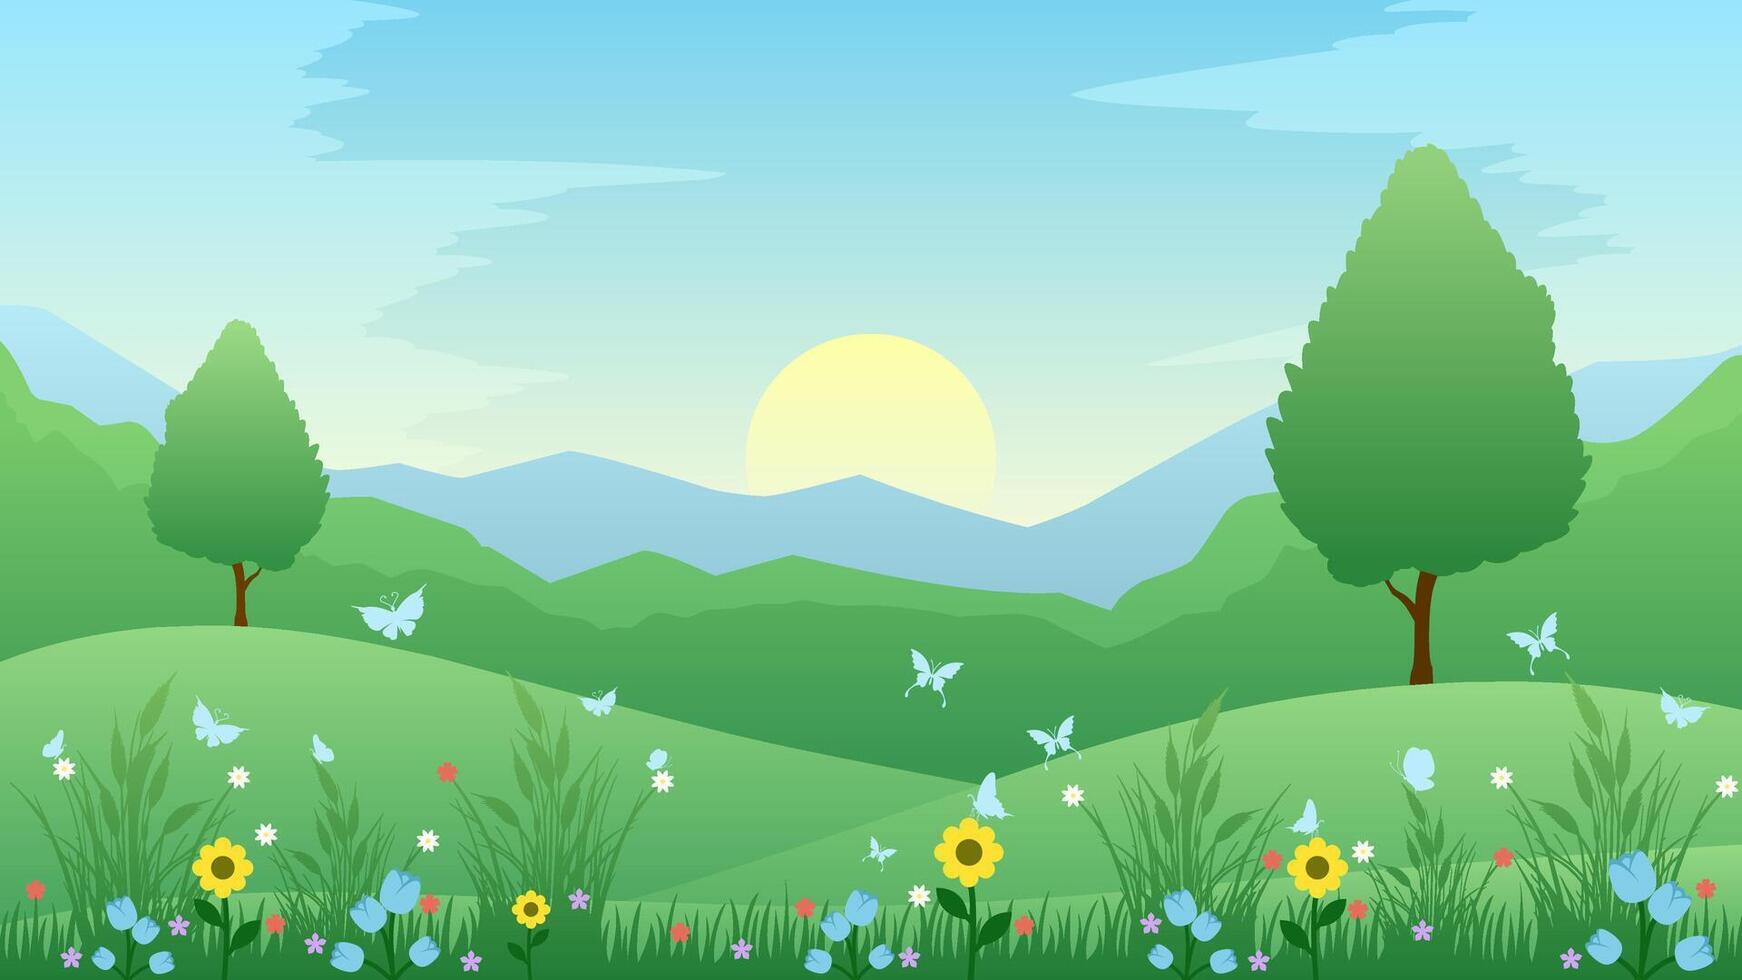 Frühling Landschaft Vektor Illustration. Hügel Landschaft im Frühling Jahreszeit mit Blühen Blumen und Wiese. Frühling Jahreszeit Landschaft zum Illustration, Hintergrund oder Hintergrund